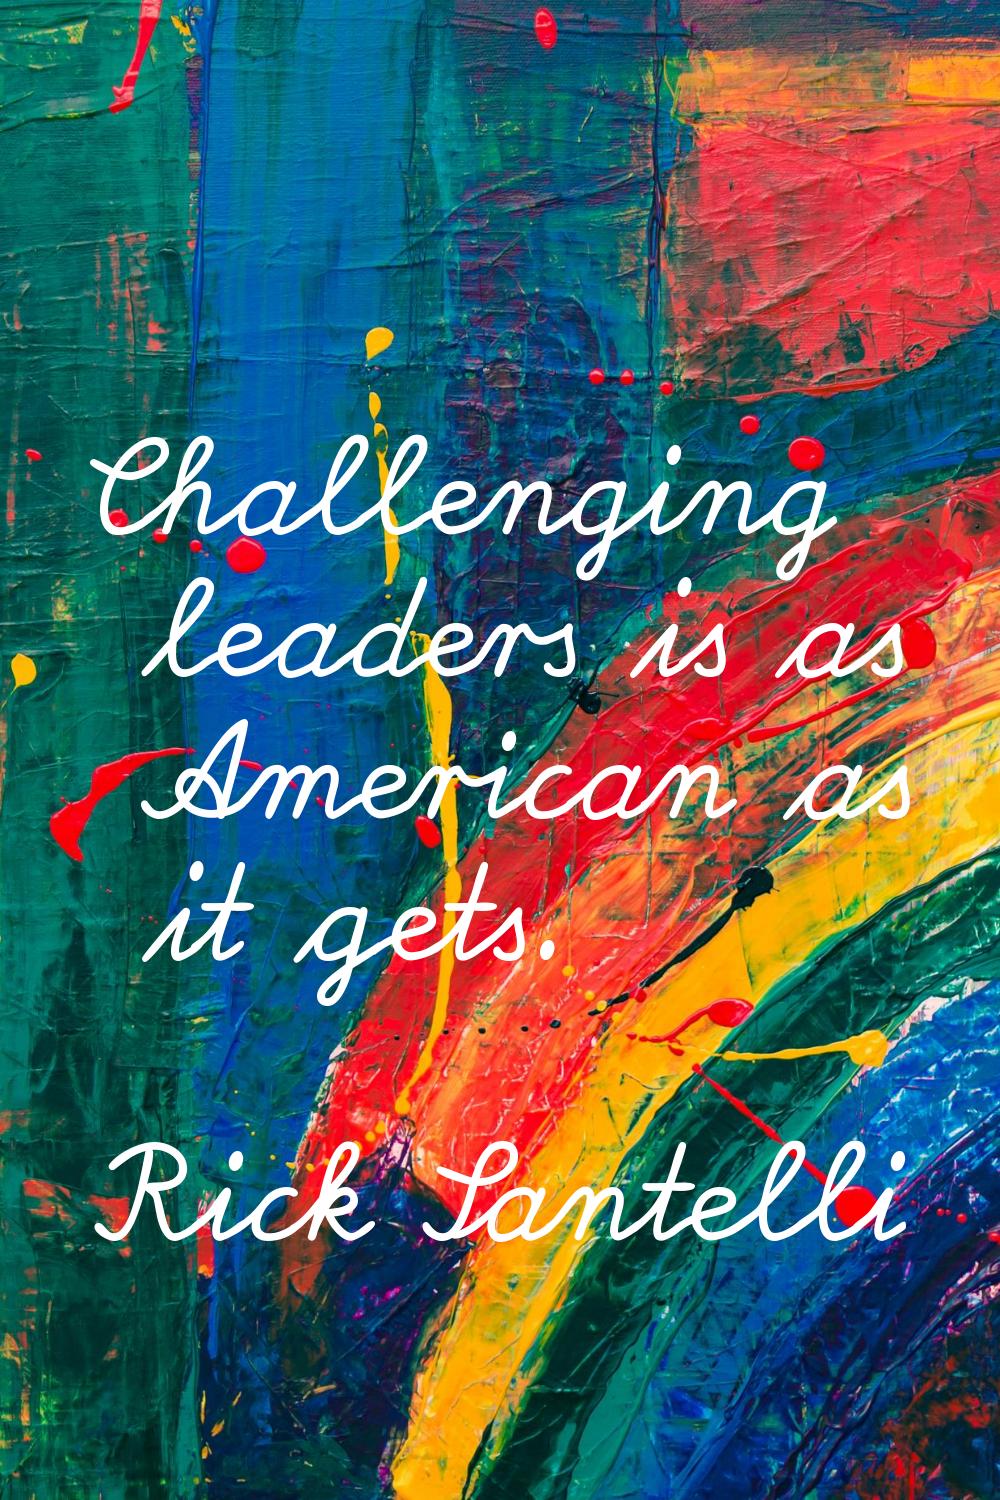 Challenging leaders is as American as it gets.